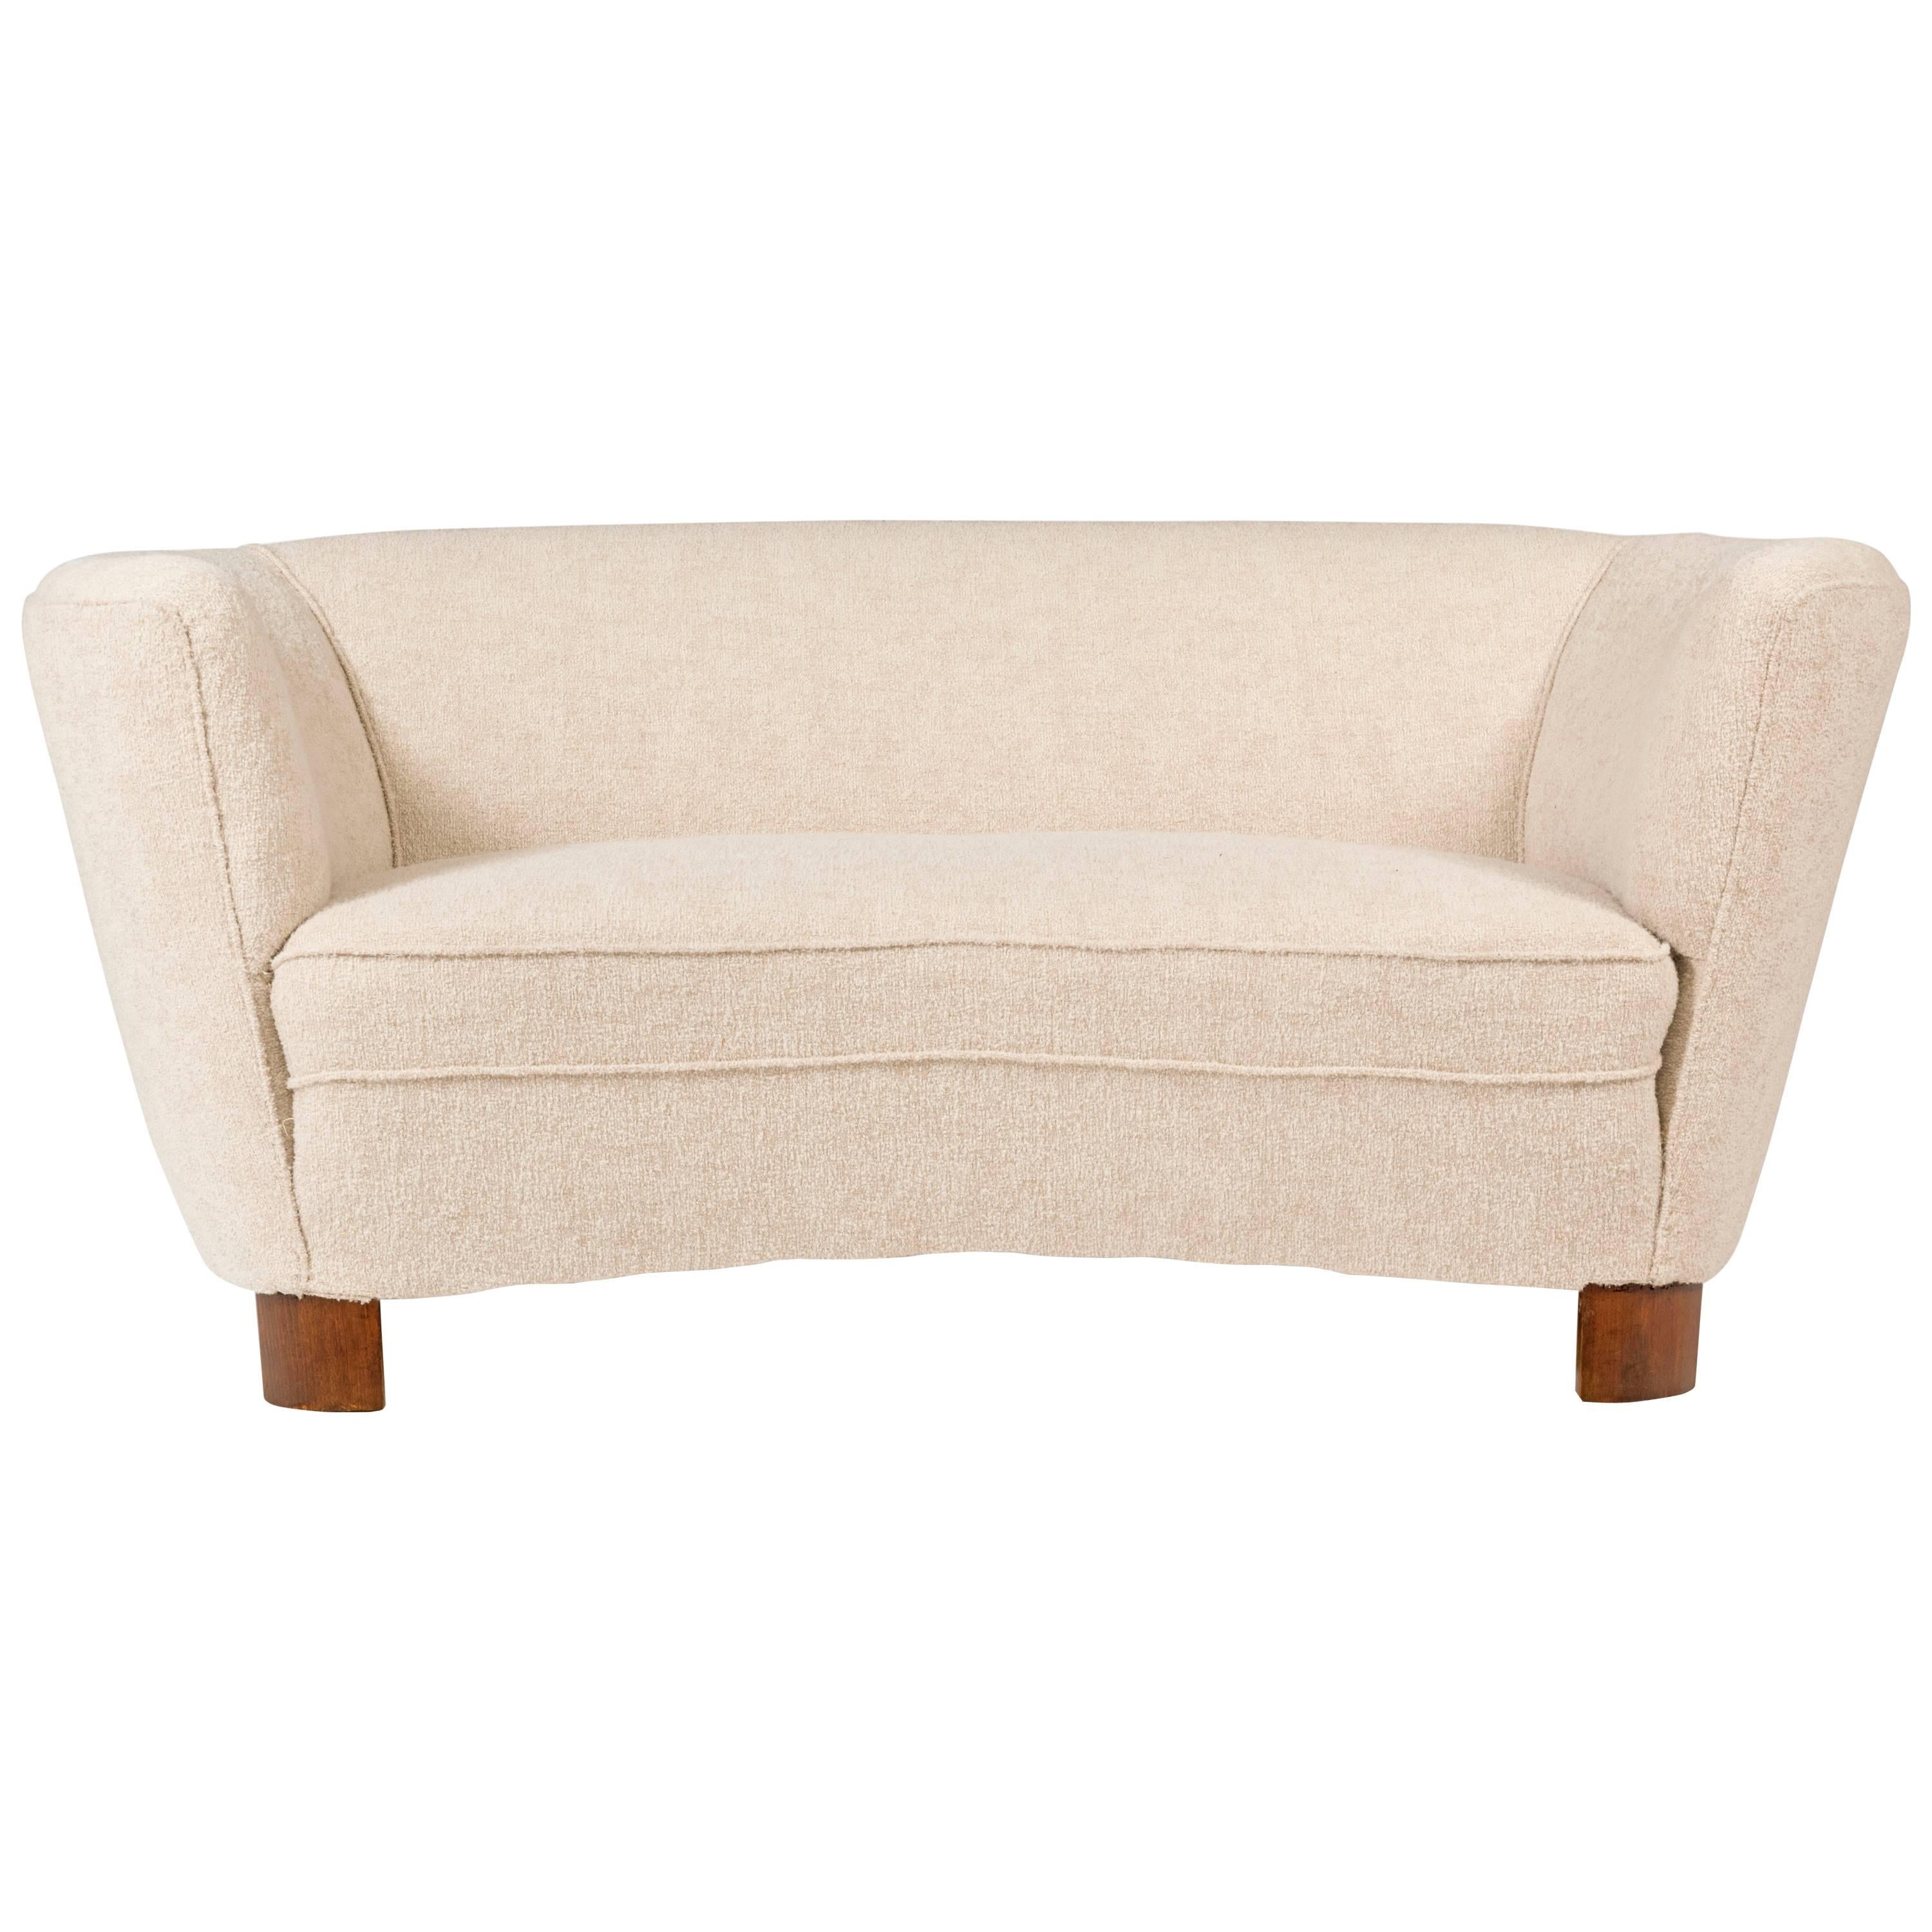 1940s Scandinavian Sofa For Sale